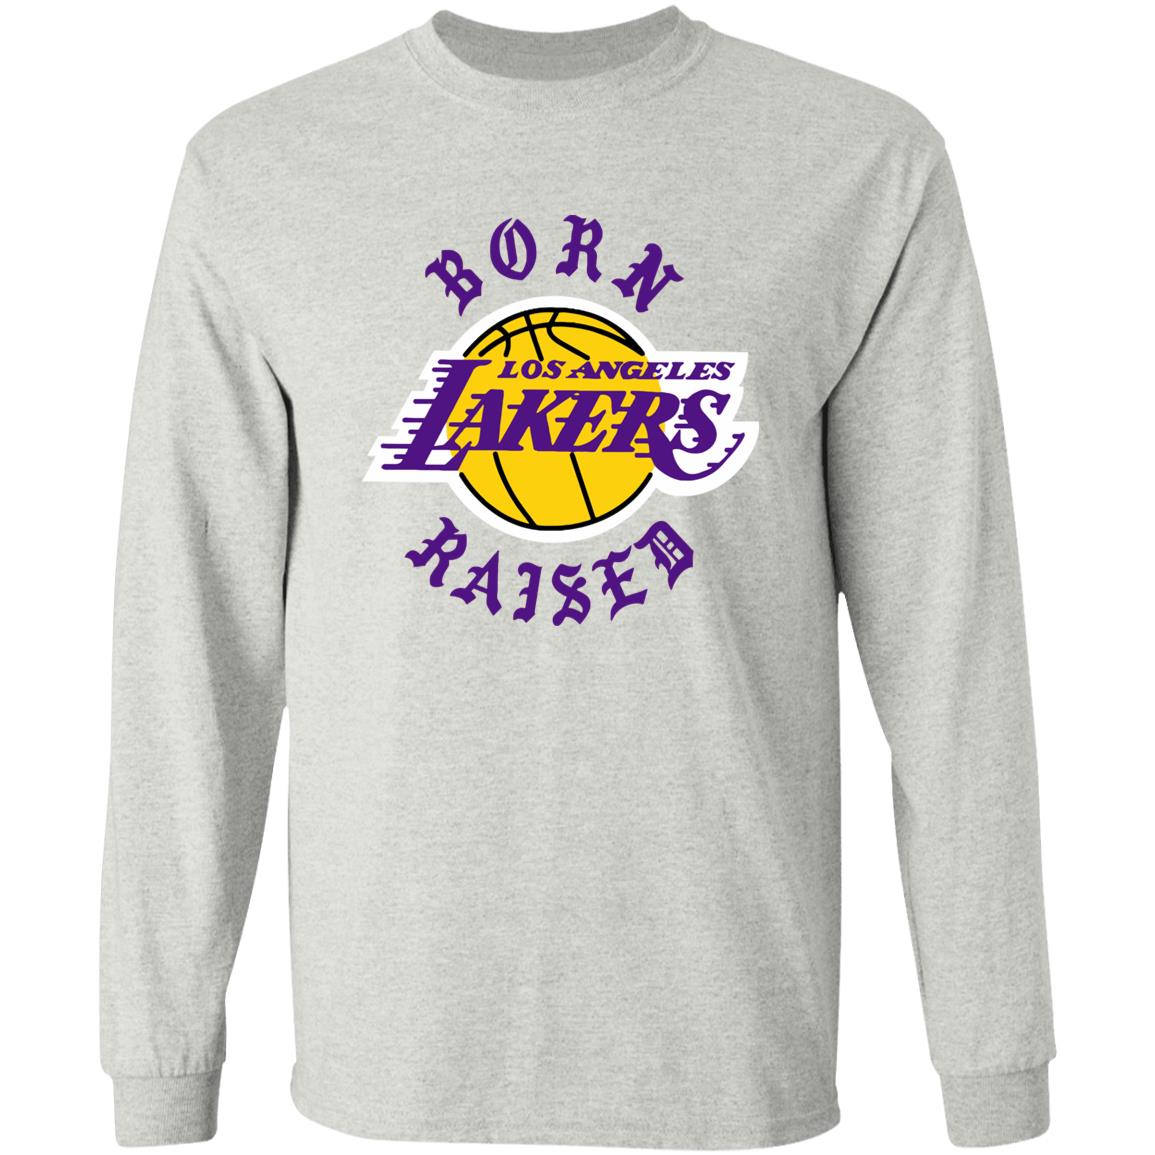 Born Raised x L.A. Lakers long sleeve tee – Panorama Street Clothing